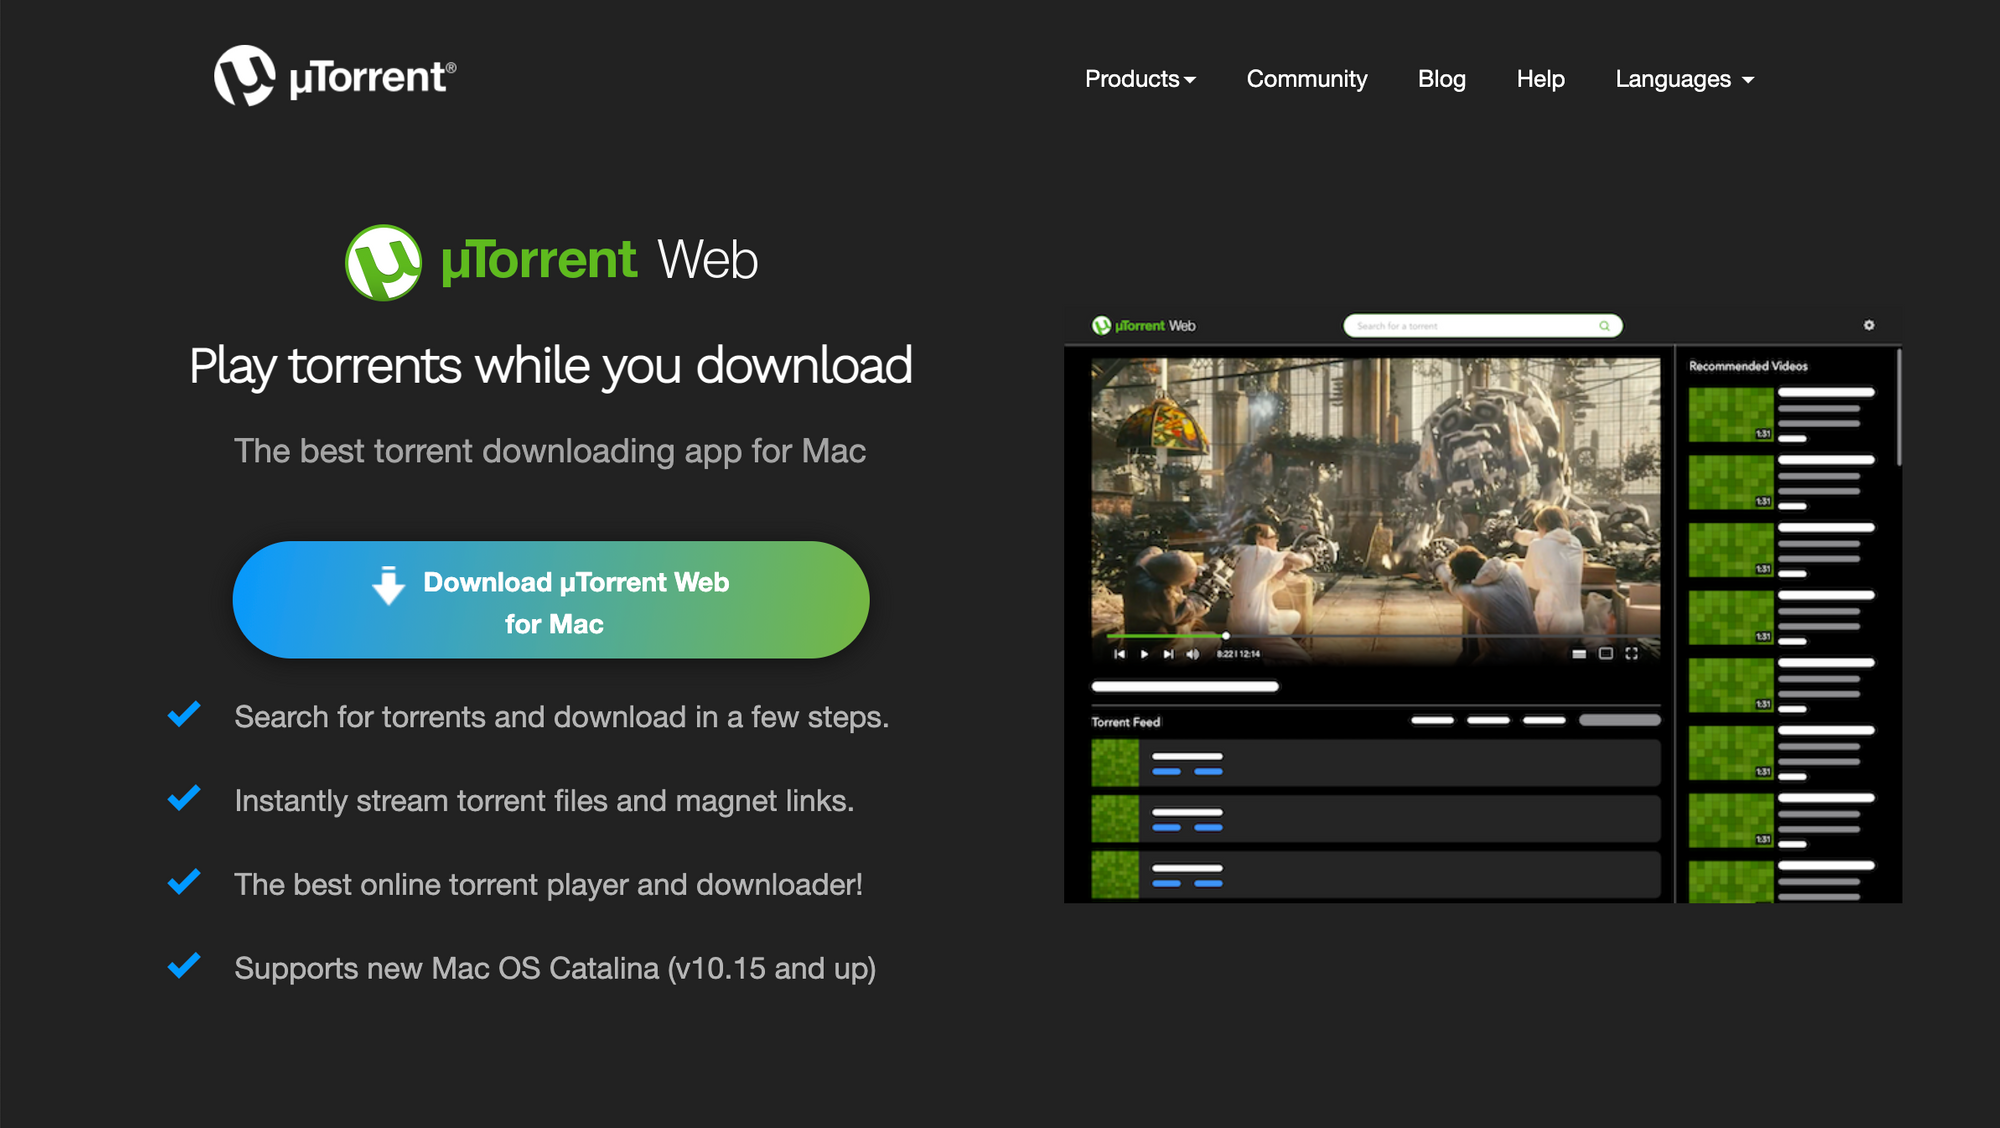 A NordVPN uTorrent Alternative – Better VPN Choices Available